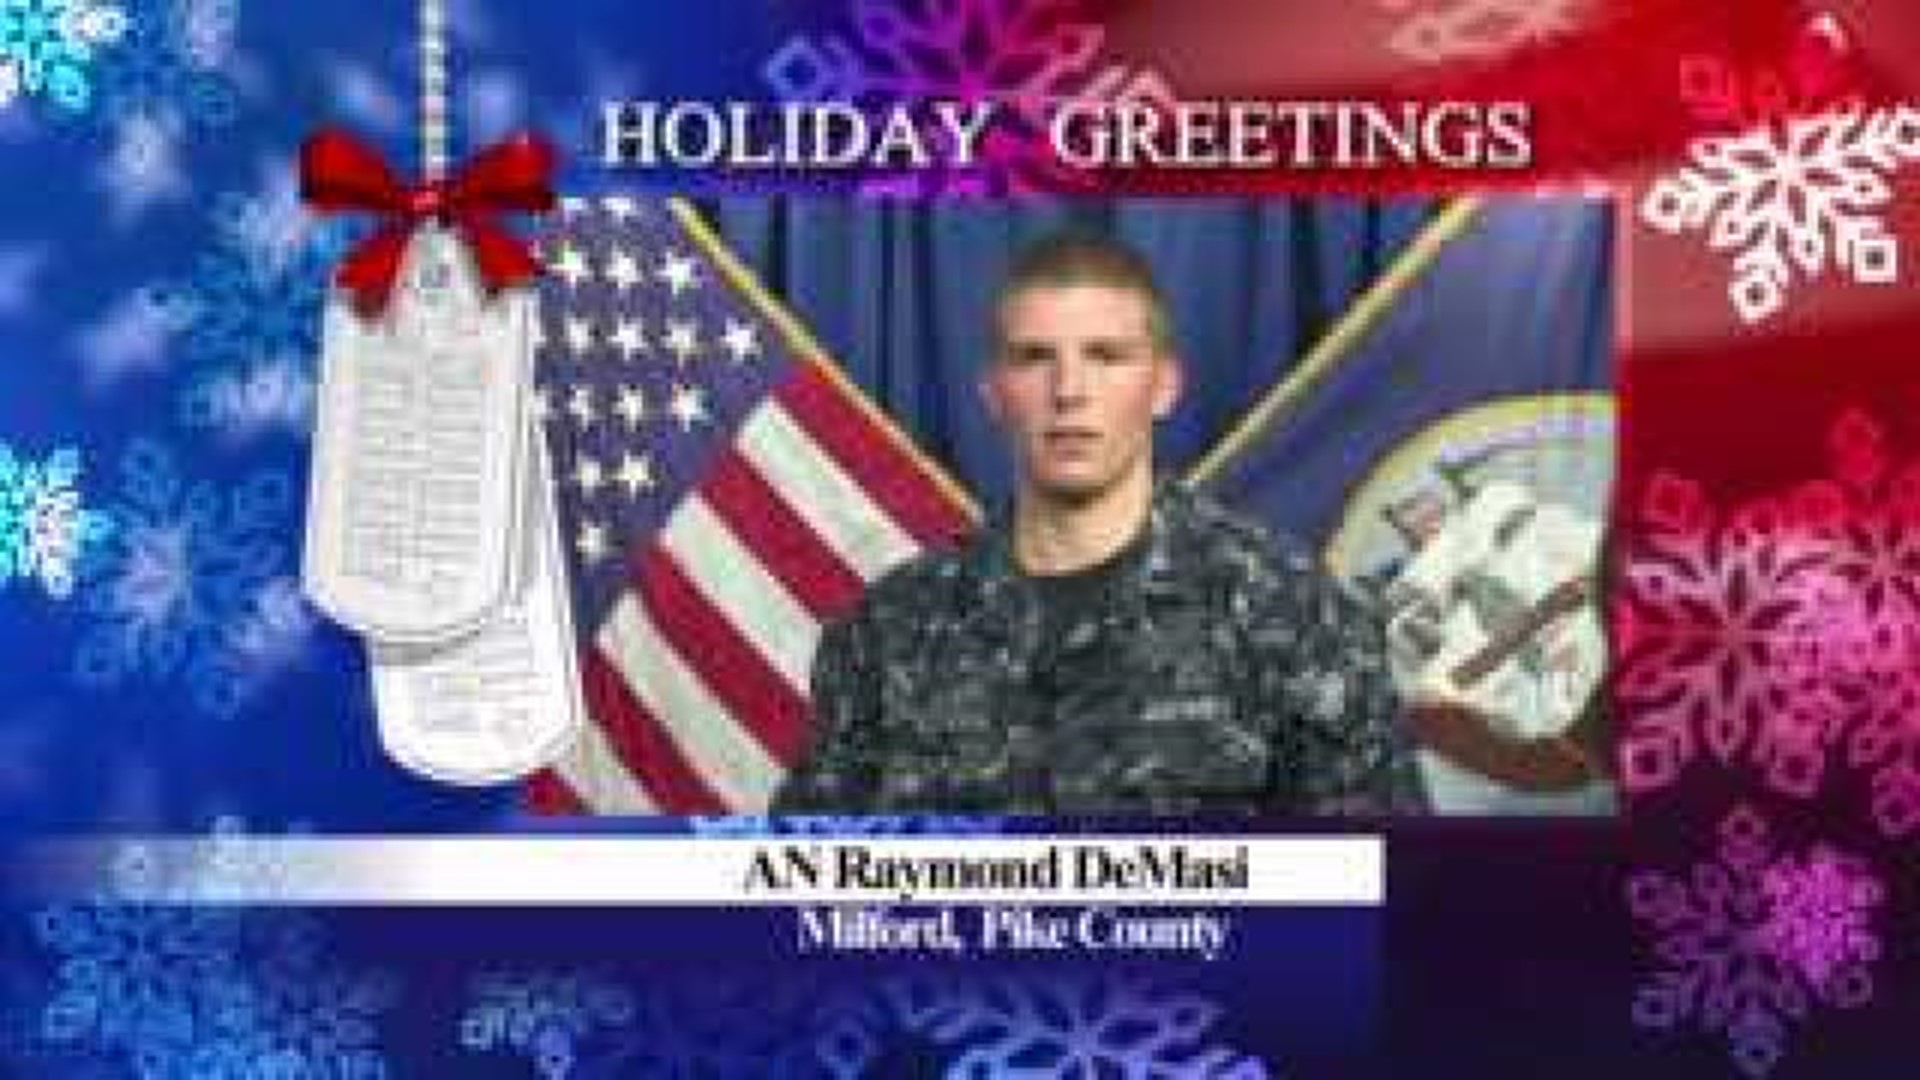 Military Greeting: AN Raymond DeMasi